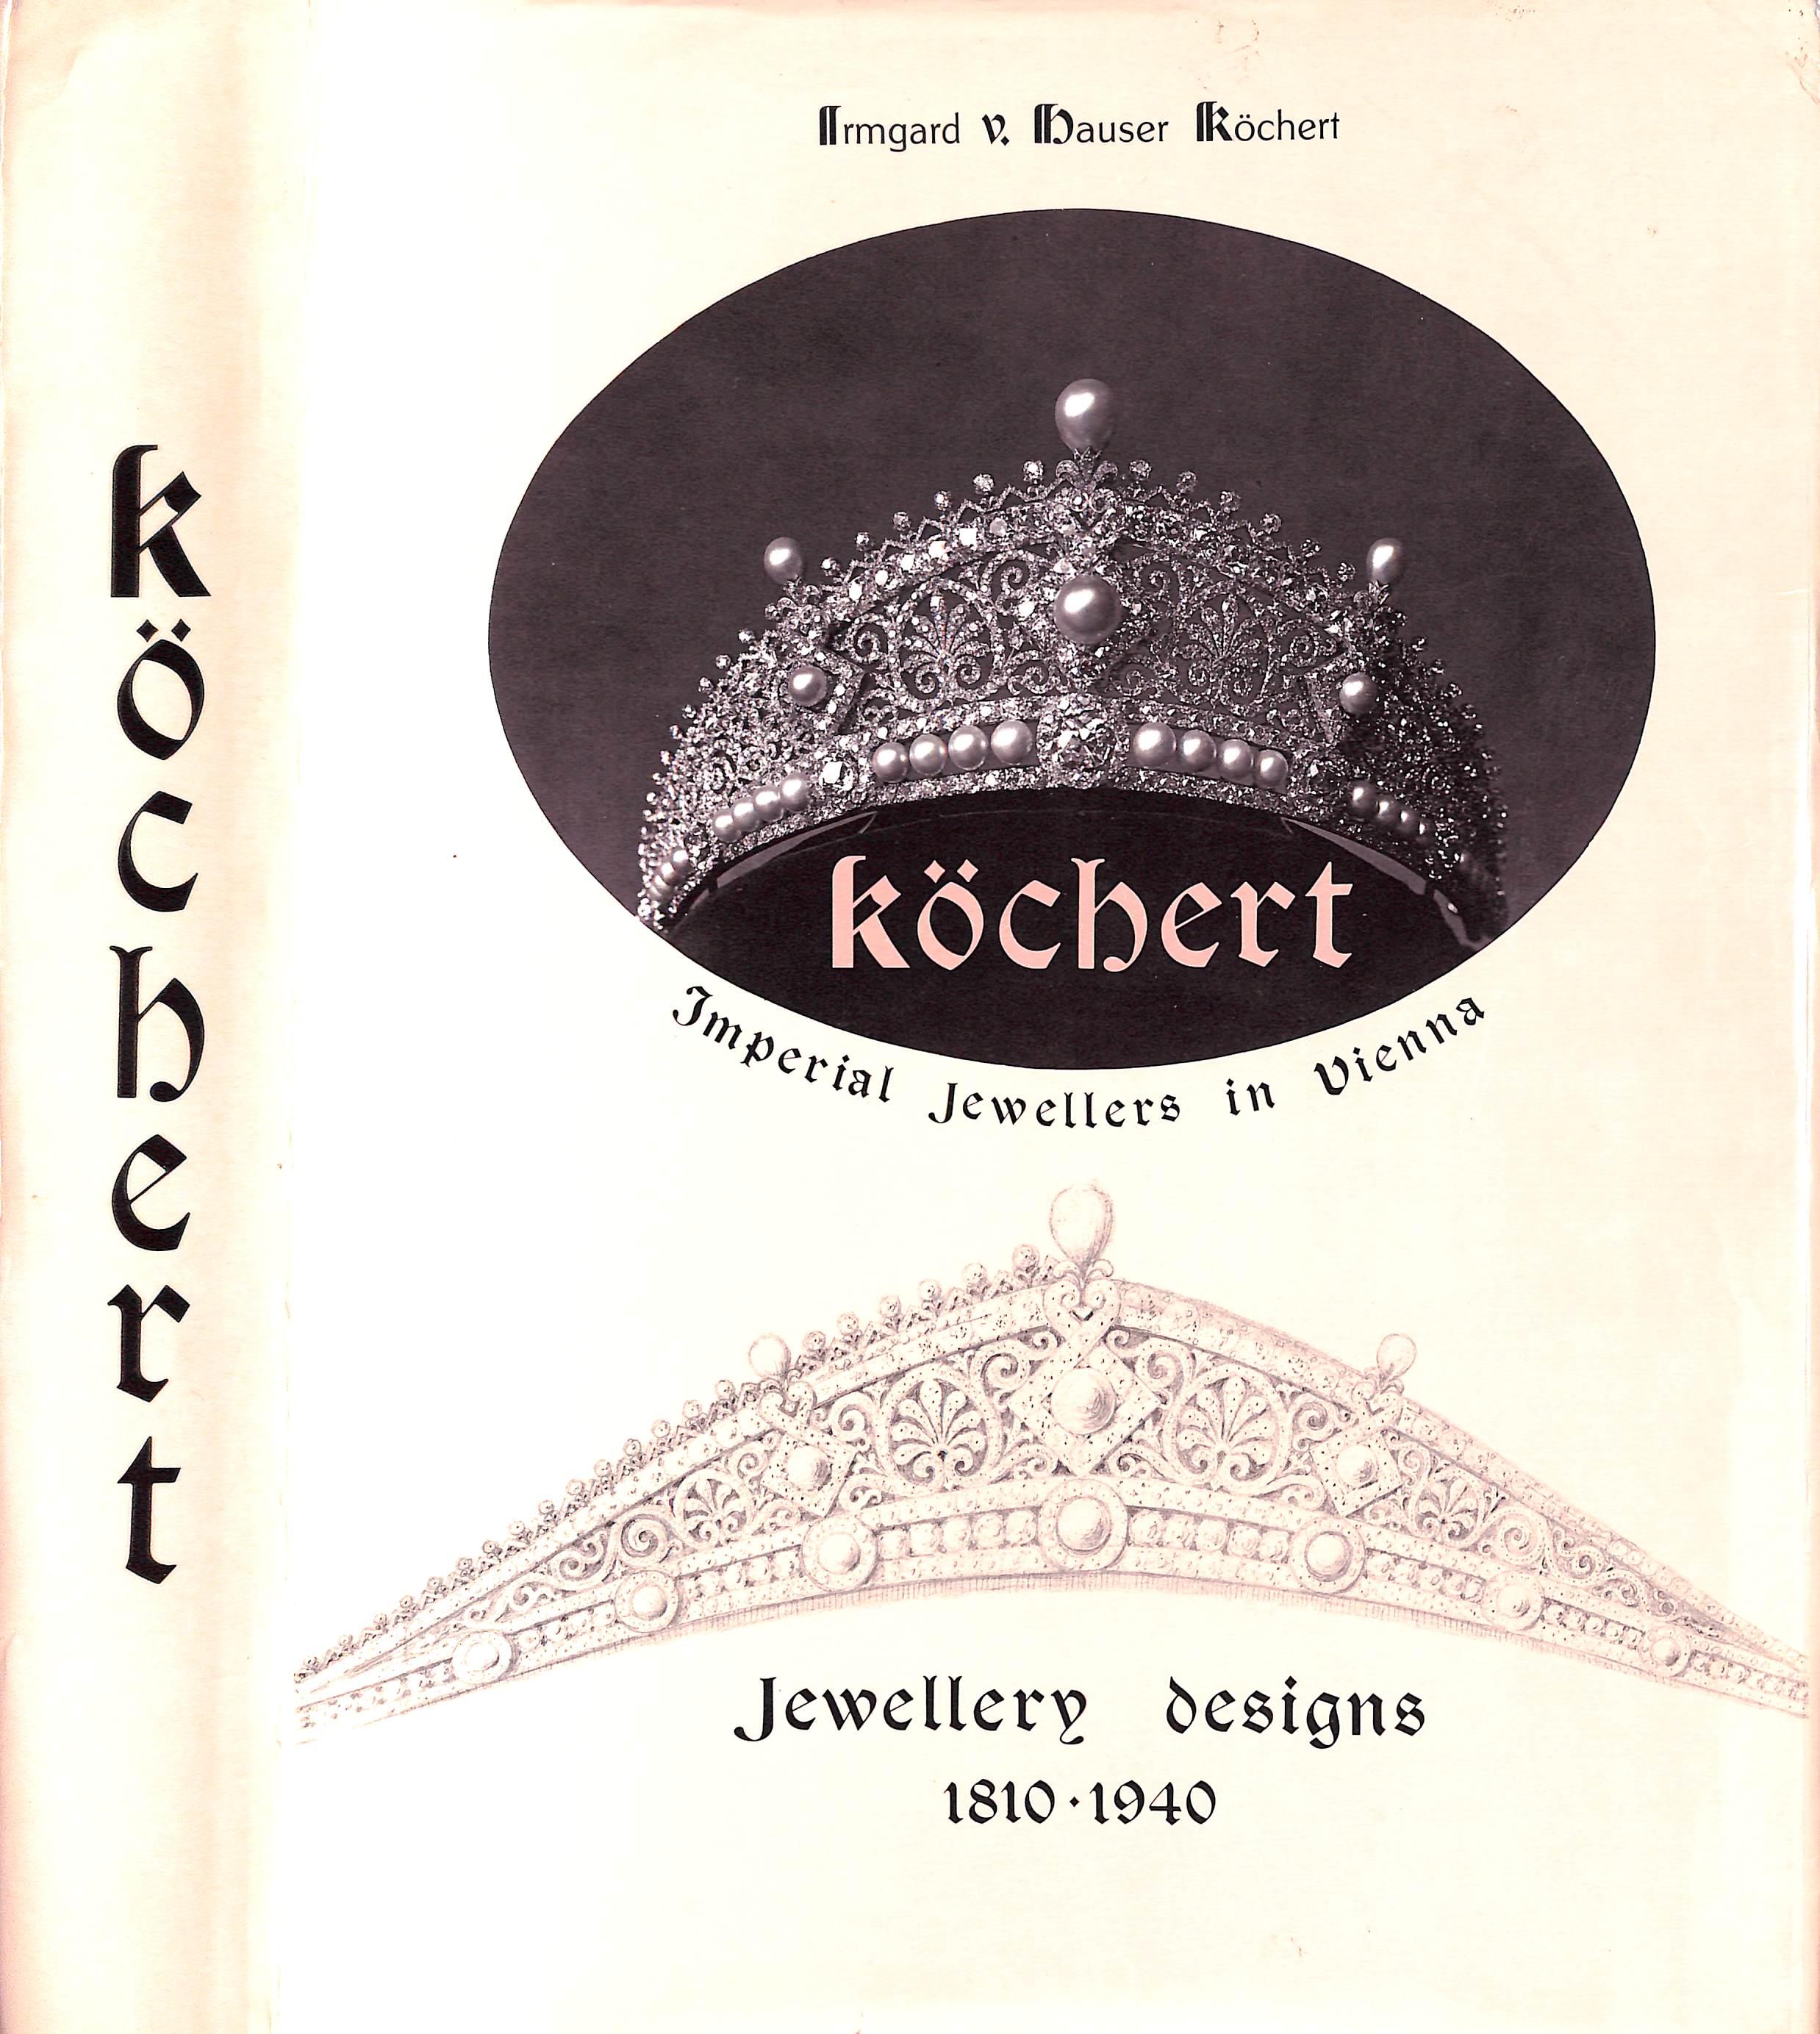 "Kochert Jewellery Designs 1810-1940: Imperial Jewellers In Vienna" 1990 KOCHERT - Art by KOCHERT, Irmgard Hauser